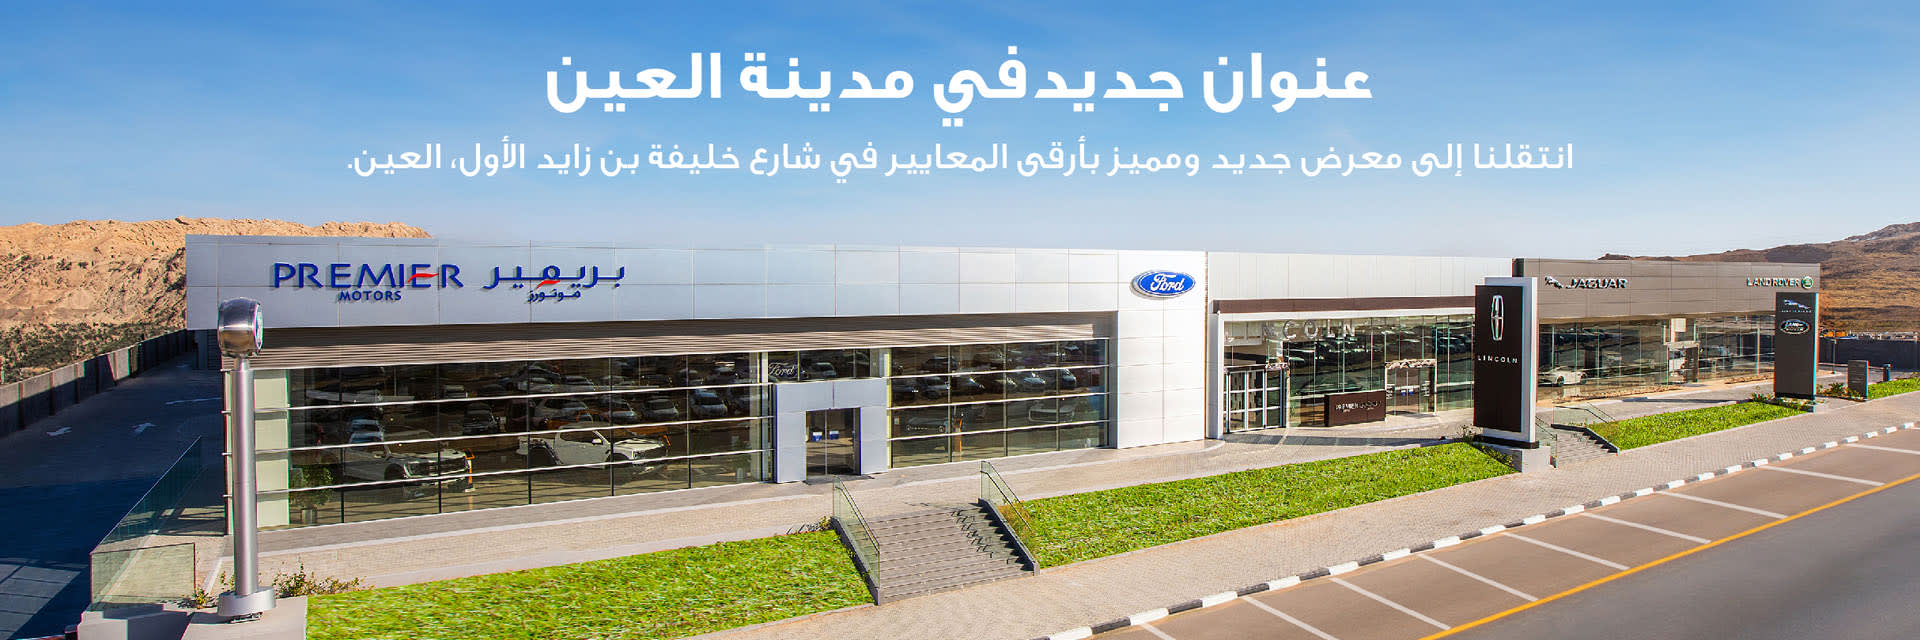 Premier Motors New 3S Facility in Al Ain